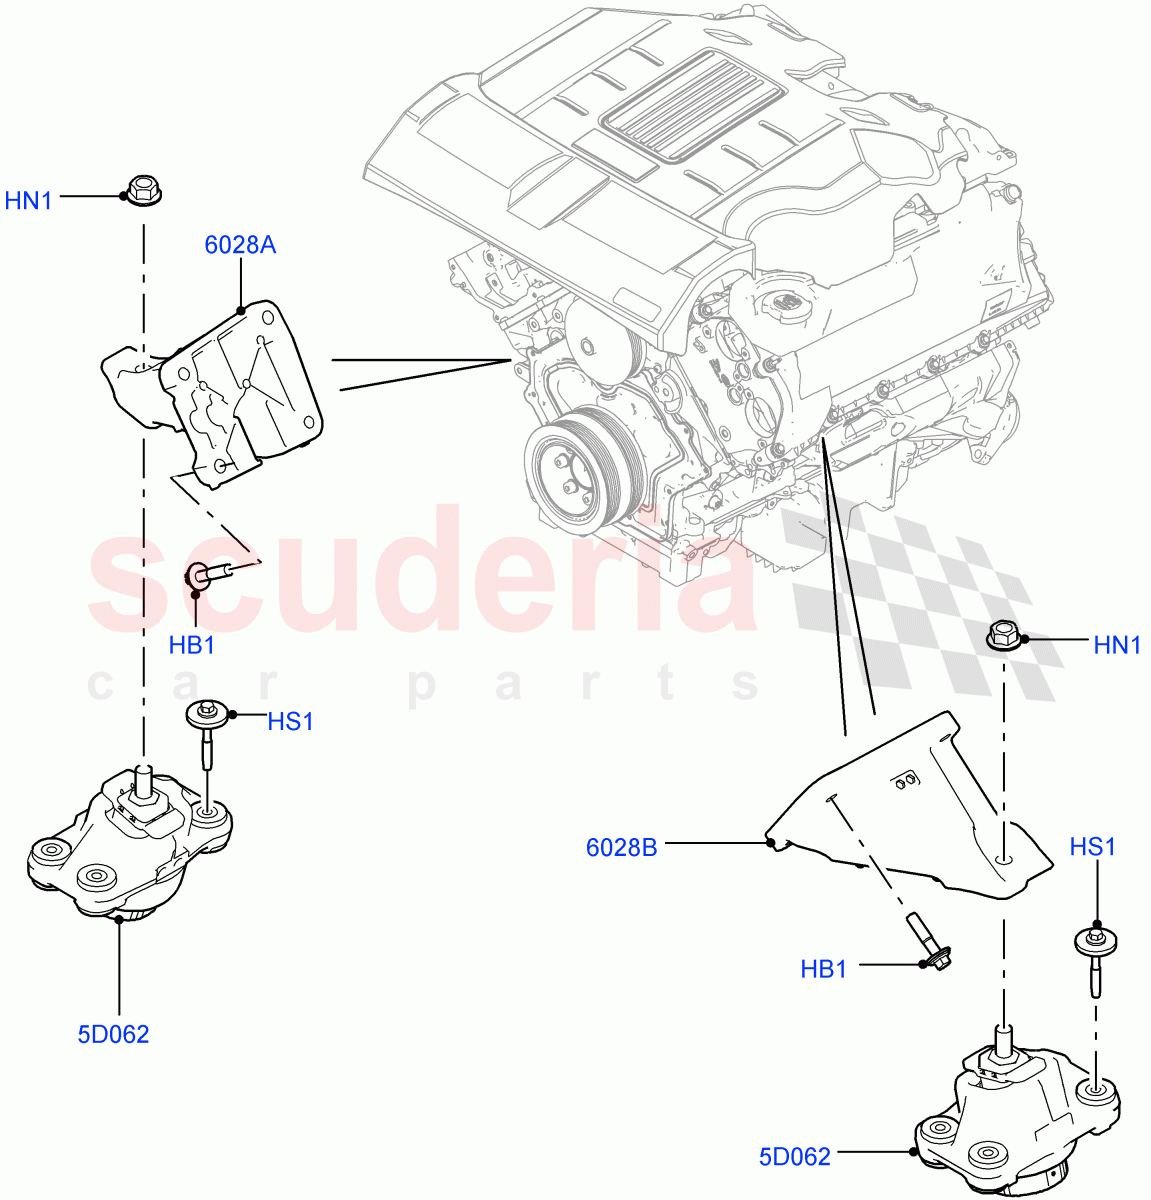 Engine Mounting(3.0L DOHC GDI SC V6 PETROL,5.0L OHC SGDI SC V8 Petrol - AJ133,5.0 Petrol AJ133 DOHC CDA,5.0L P AJ133 DOHC CDA S/C Enhanced) of Land Rover Land Rover Range Rover Sport (2014+) [5.0 OHC SGDI SC V8 Petrol]